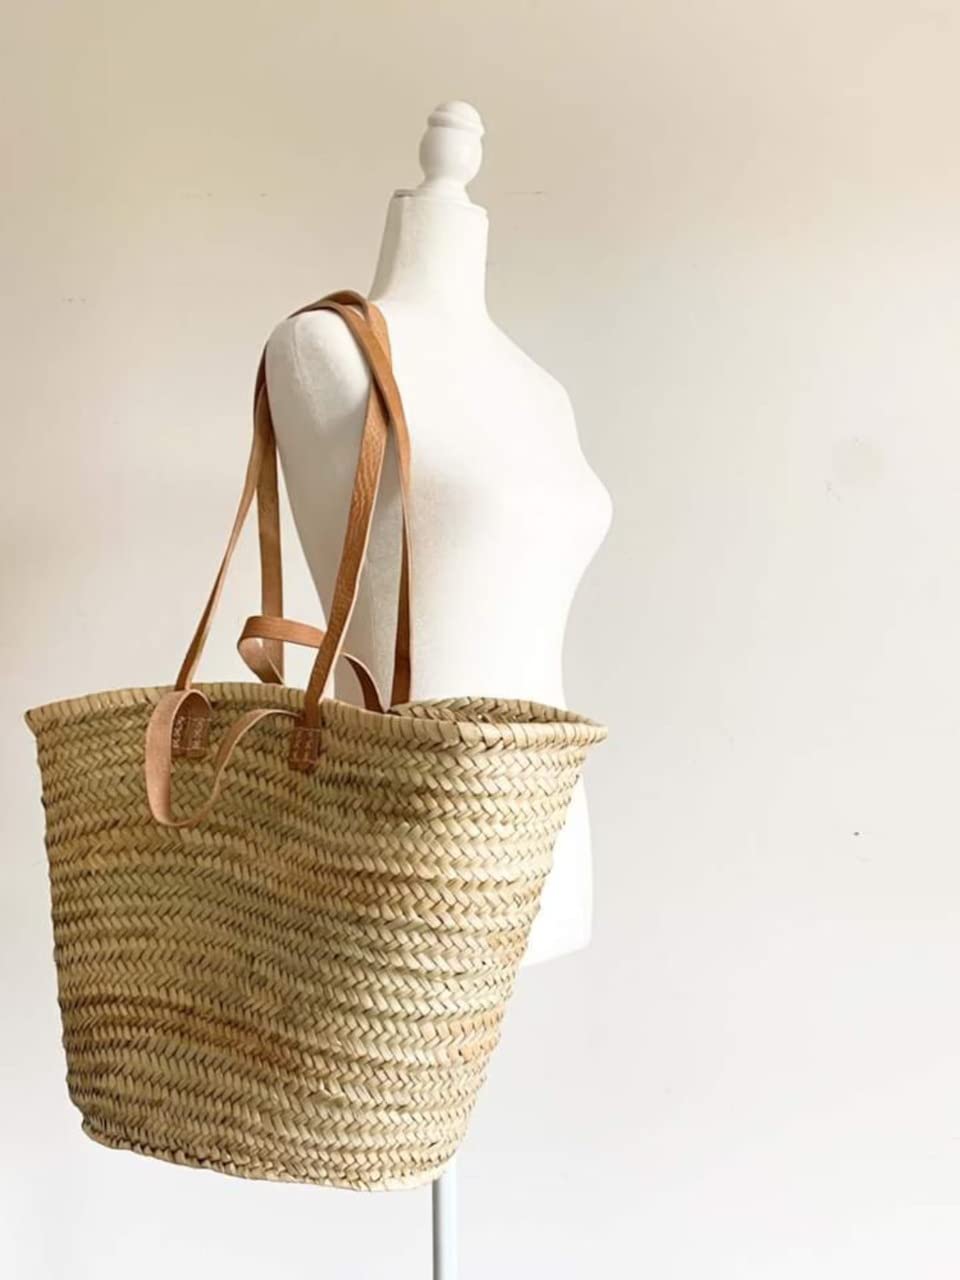 Storekech Straw Bag Handmade with Double Handle French Market Basket, Straw Basket, Grocery Market Bag, Moroccan Straw Bag, Bridesmaid Gift, Beach Straw Bag, Woven Bag, Summer Straw Bag, Beige